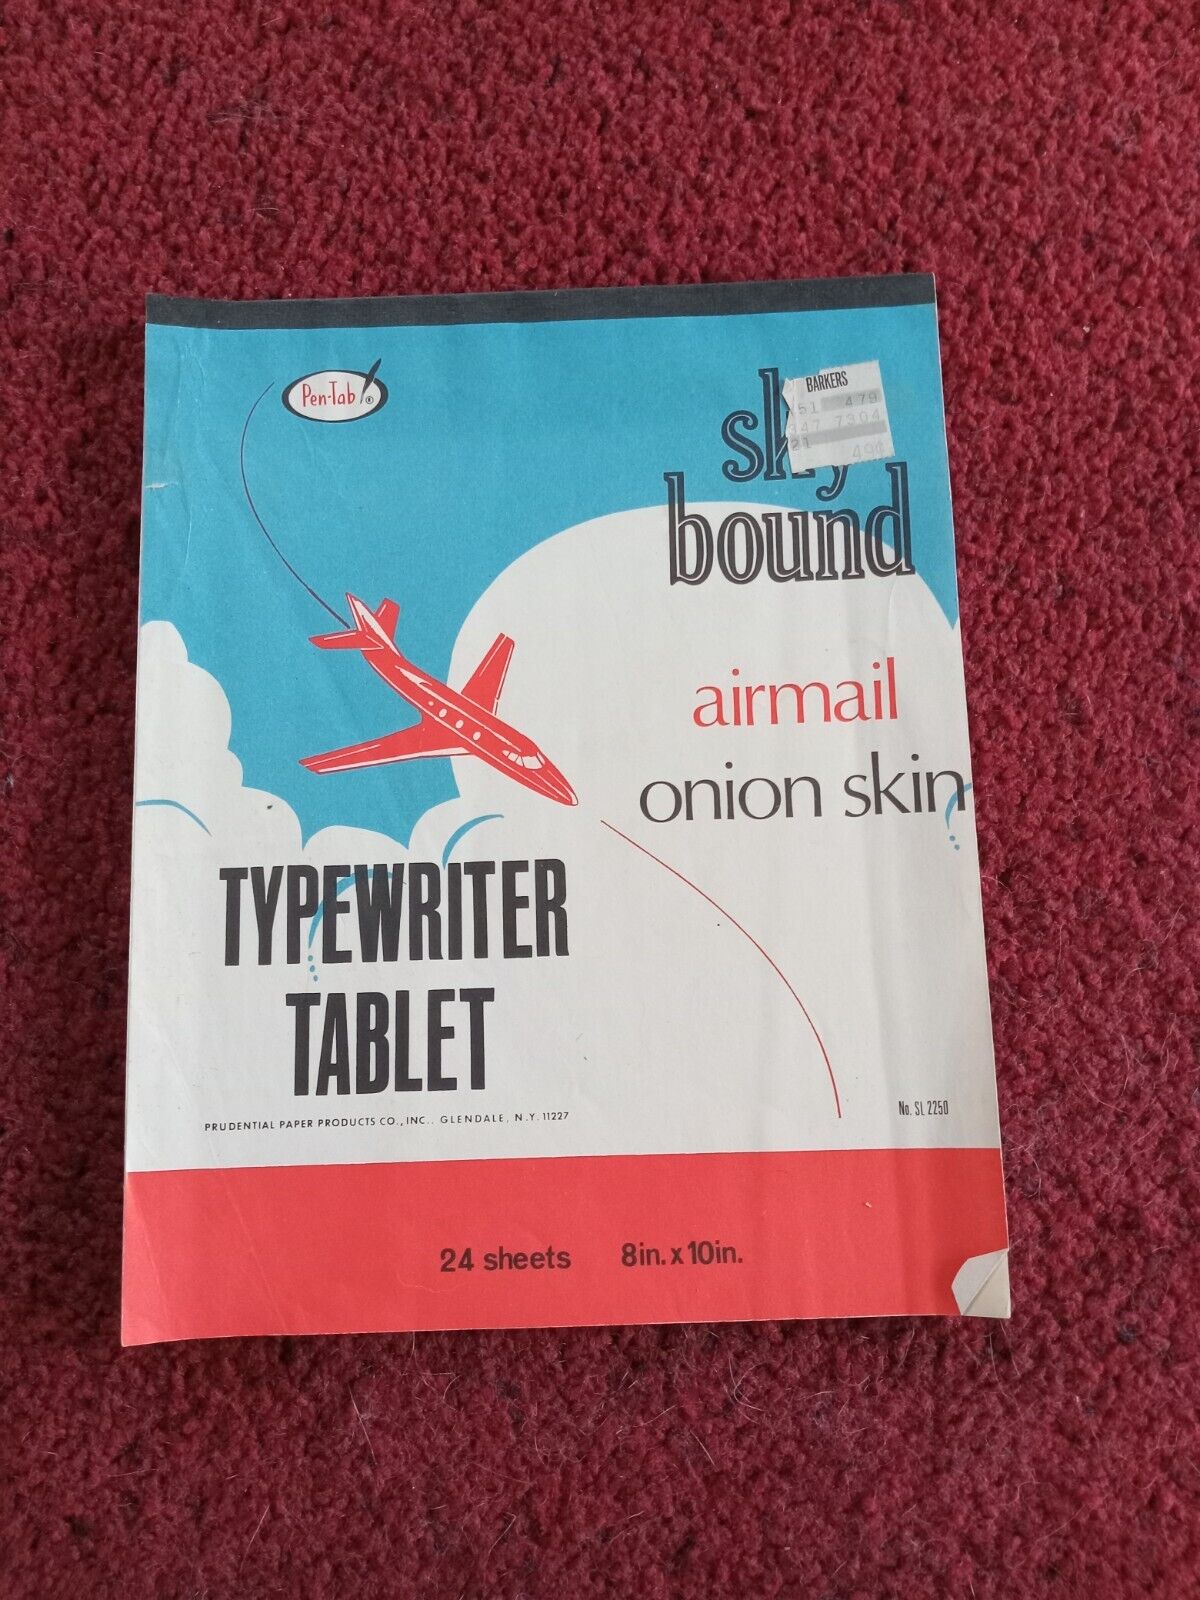 PenTab Sky Bound AirMail Onion Skin typwriter tablet Prudential Paper Co Vintage